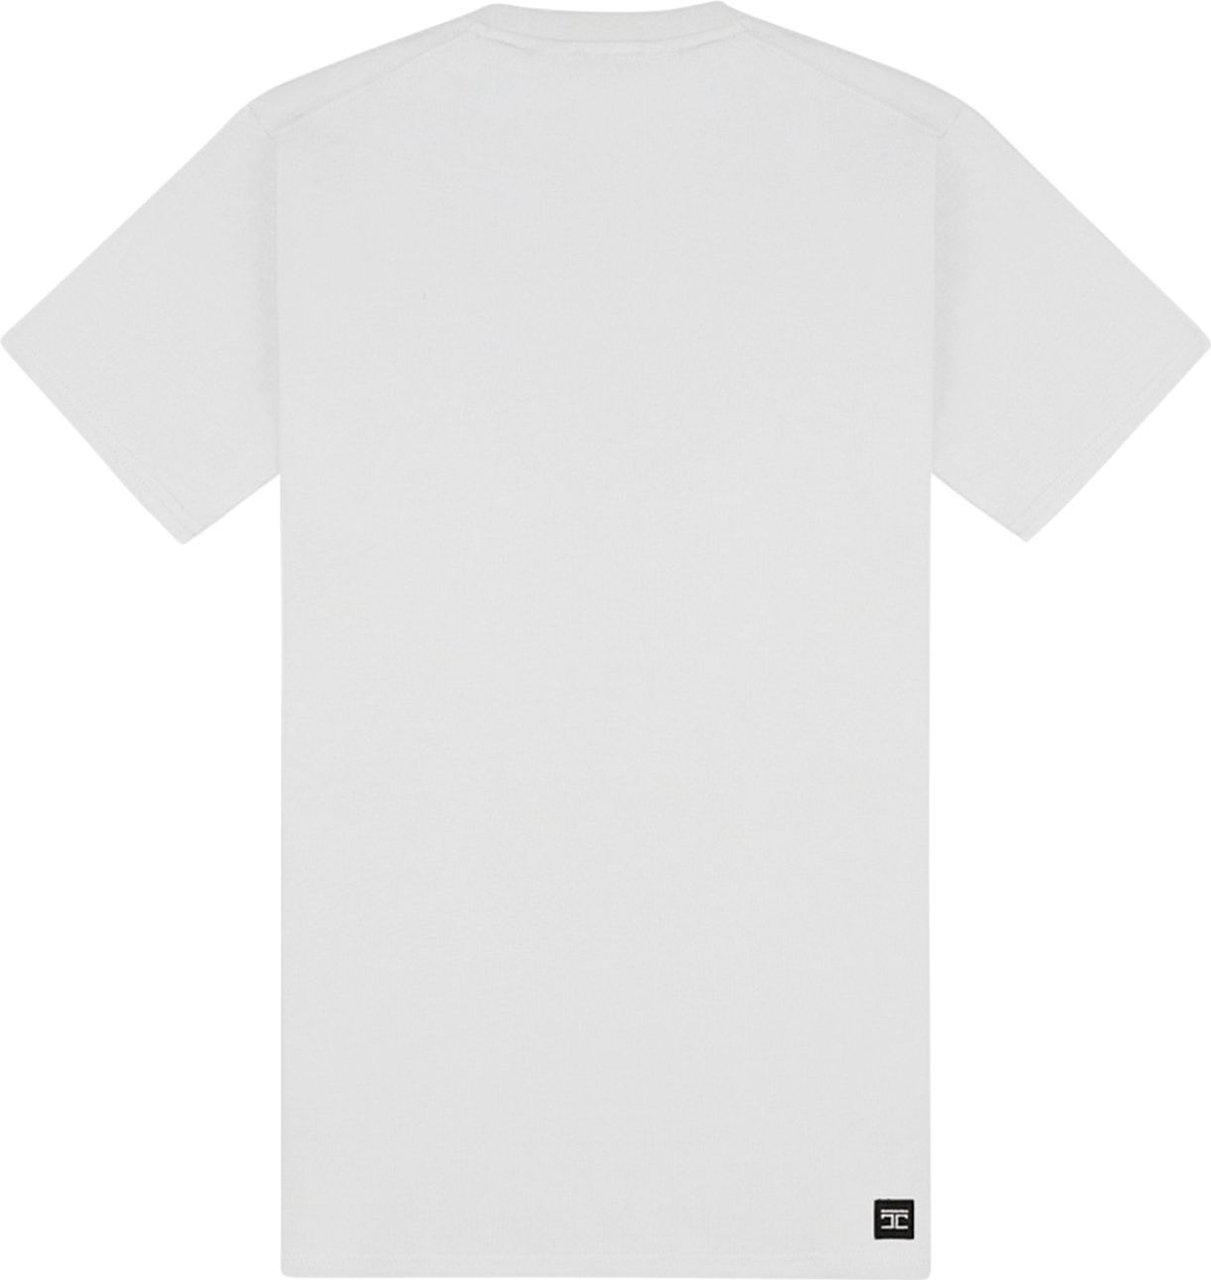 JORCUSTOM Visionary Slim Fit T-Shirt White Wit